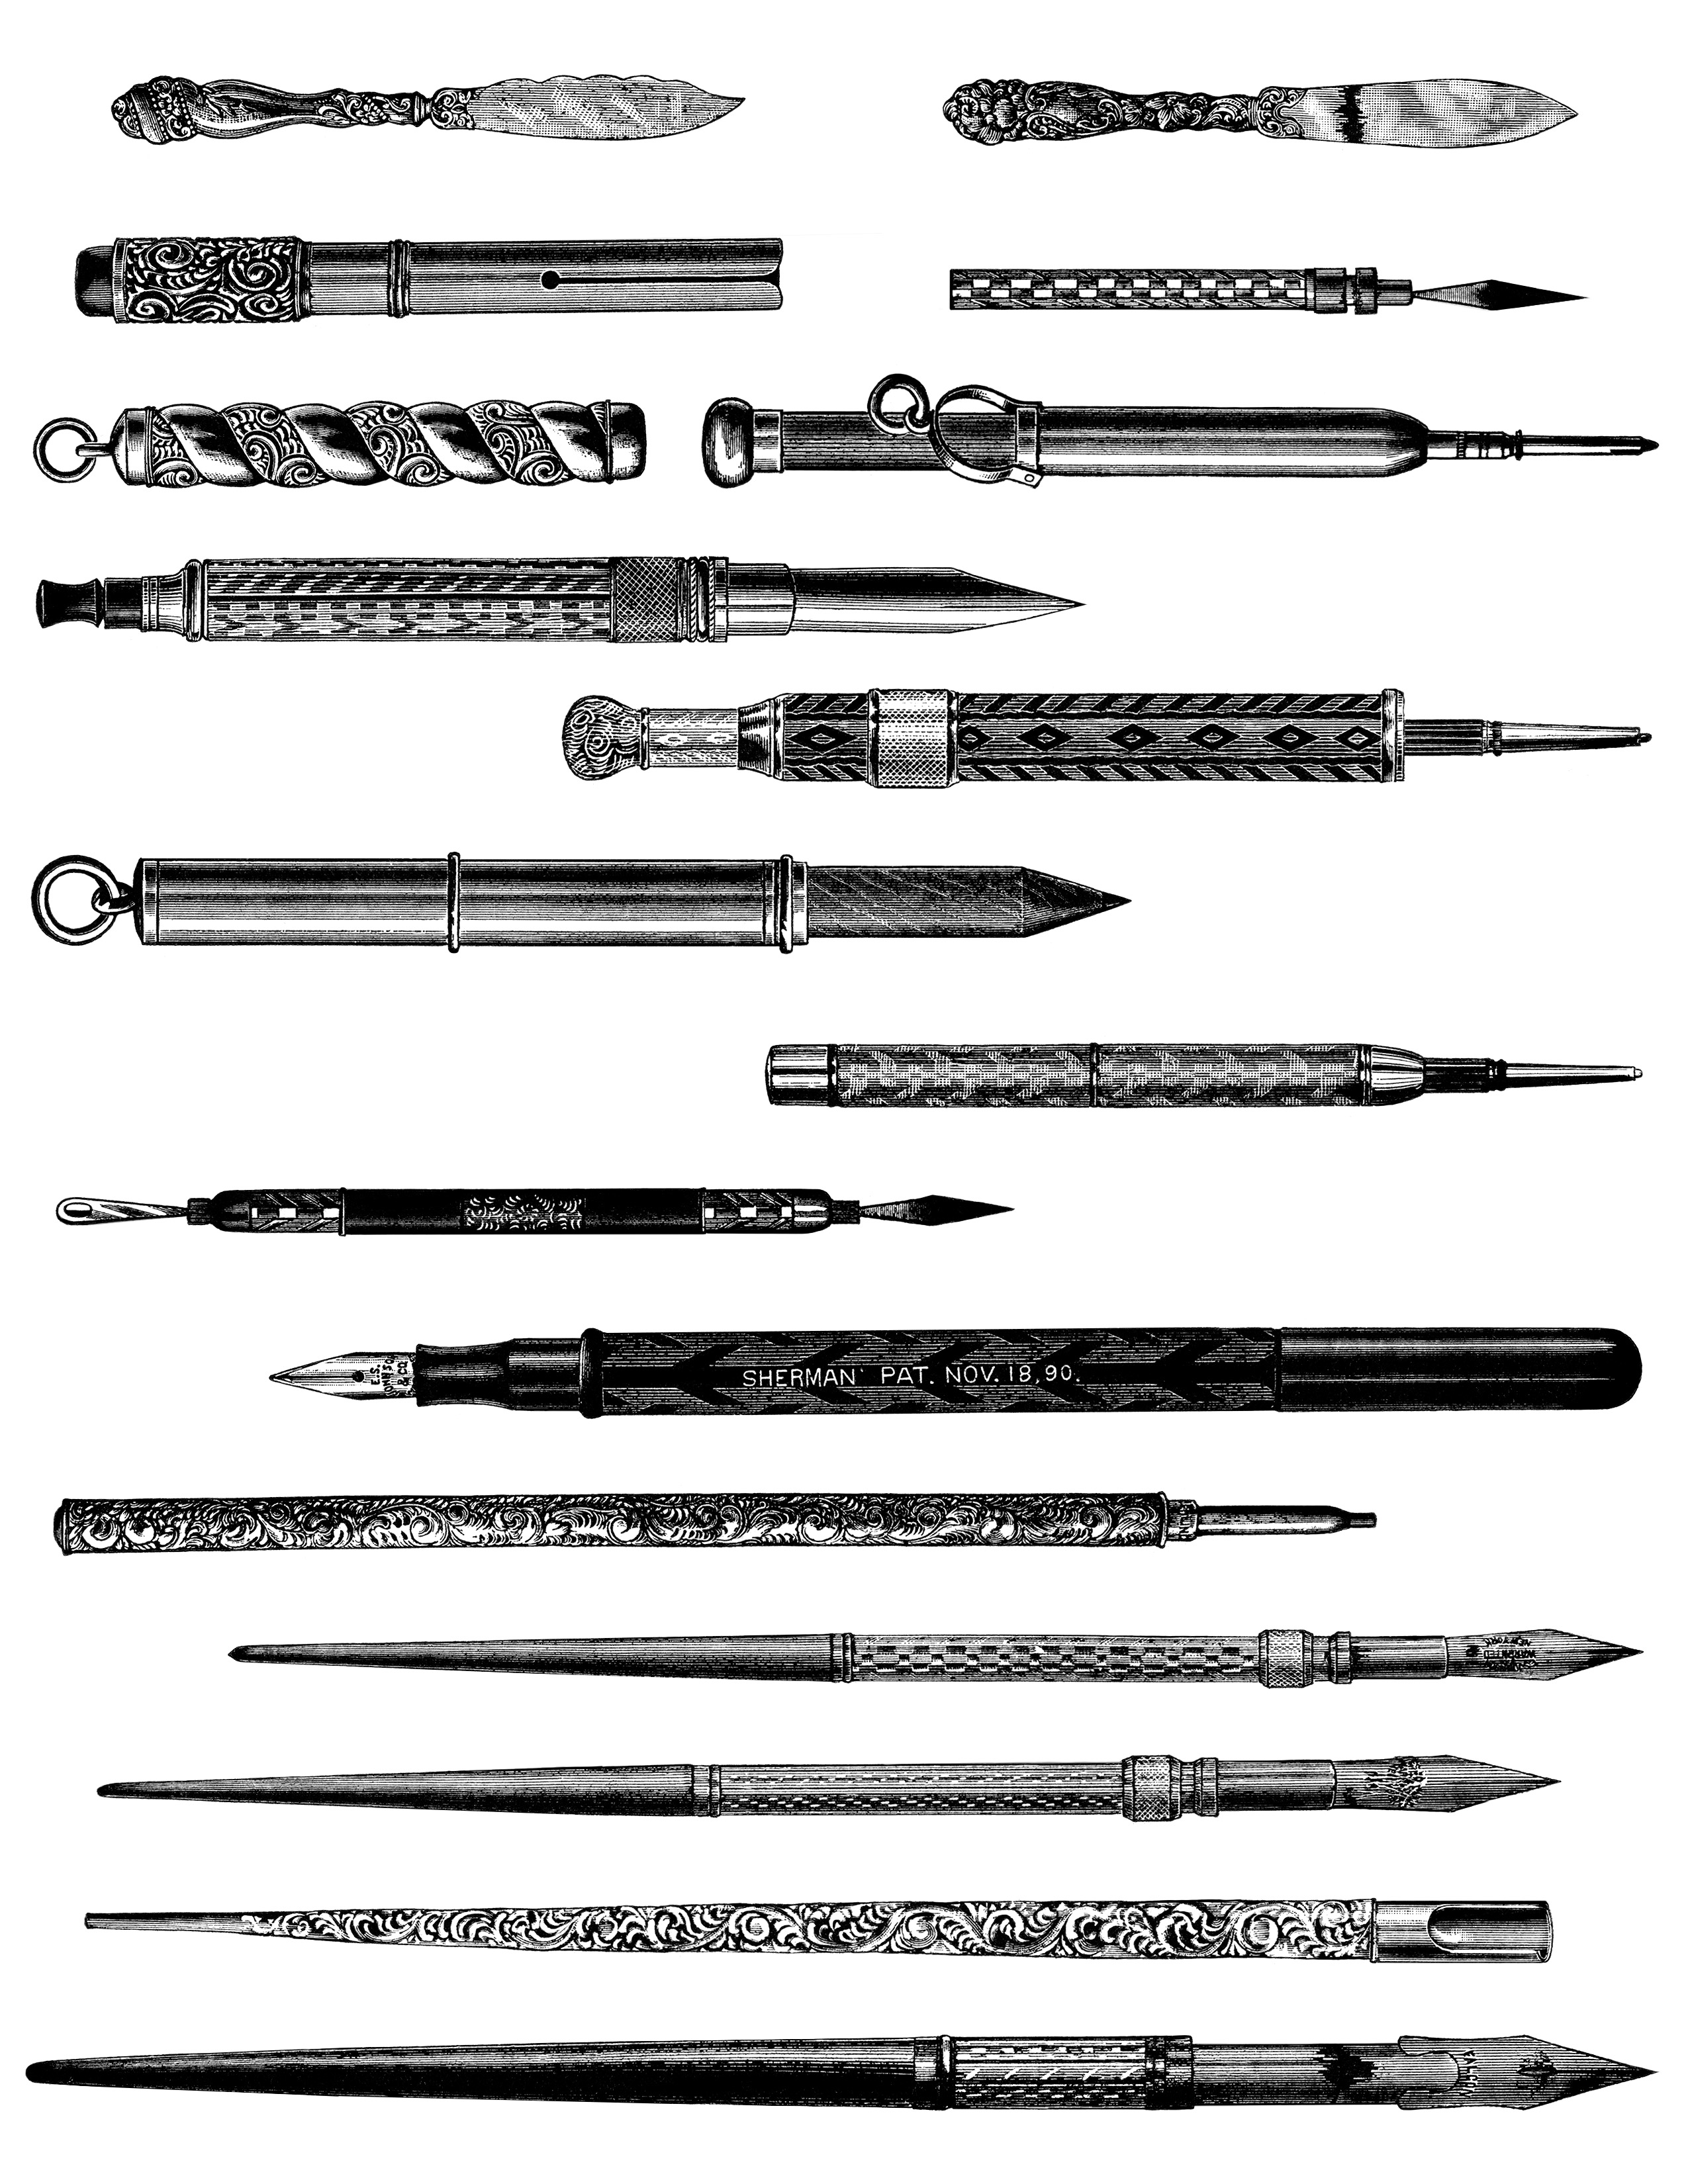 Free Vintage Image Pens Pencils And Paper Cutters   Old Design Shop